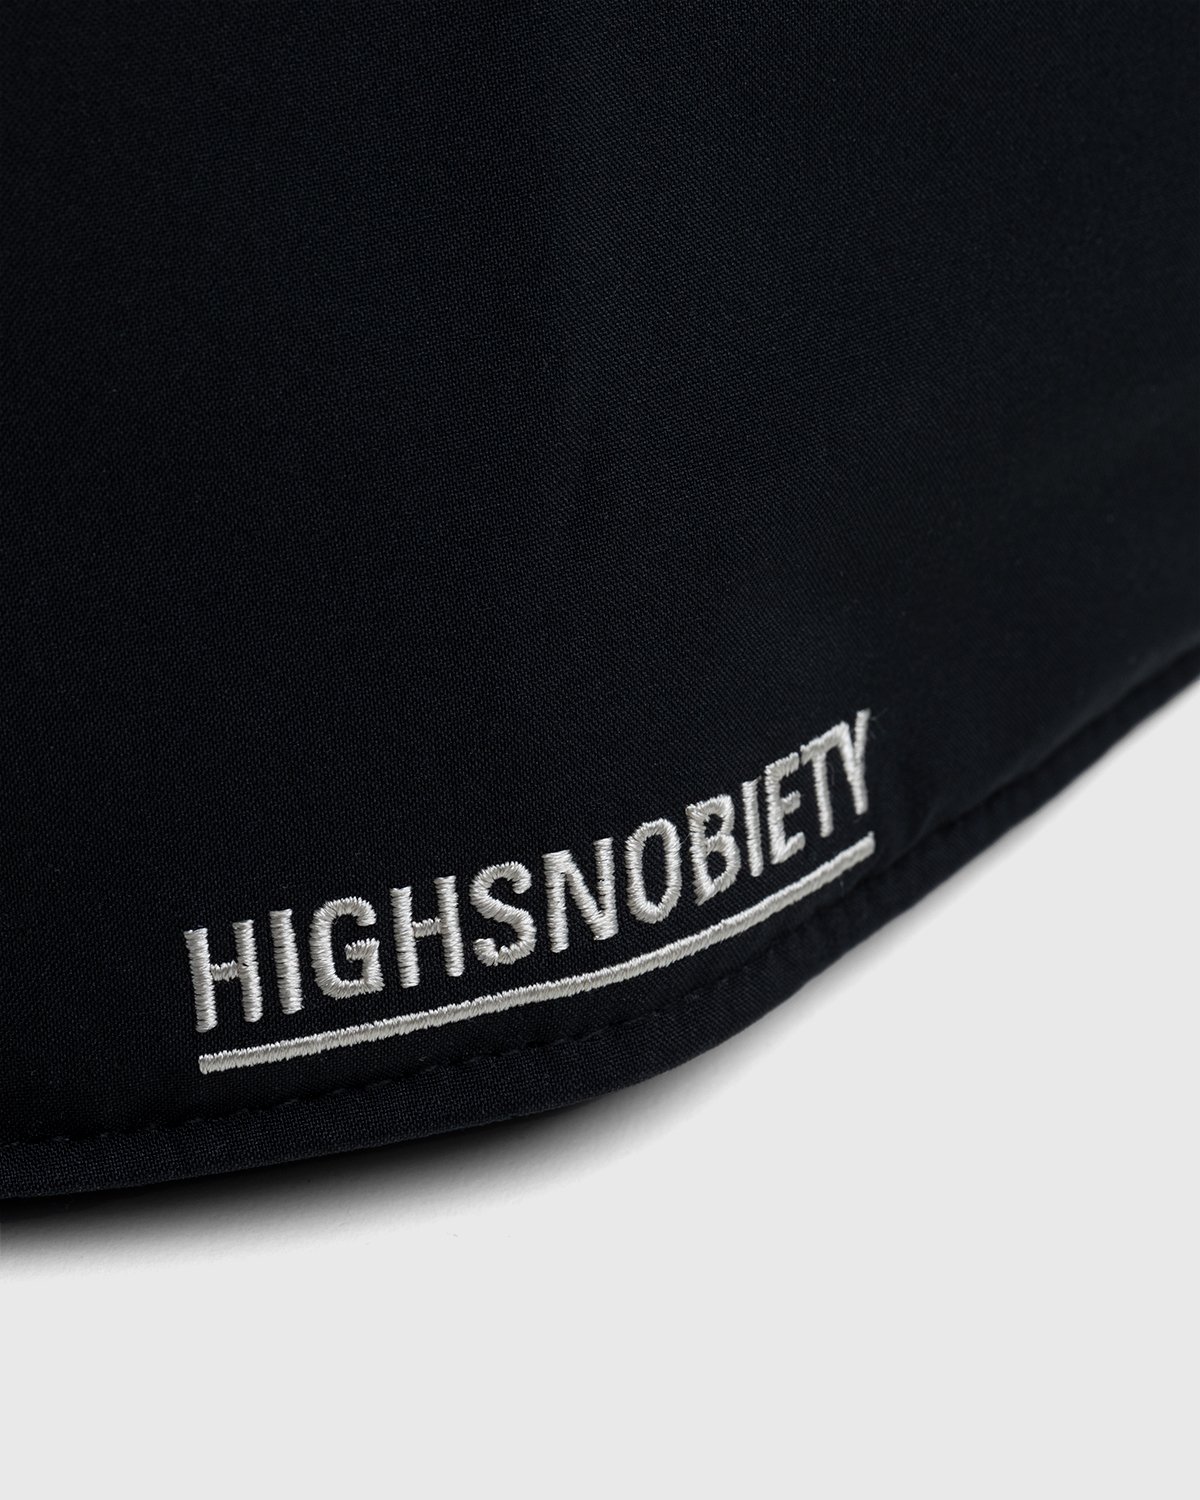 Jack Wolfskin x Highsnobiety - HS Sports 5-Panel Cap Black - Accessories - Black - Image 4